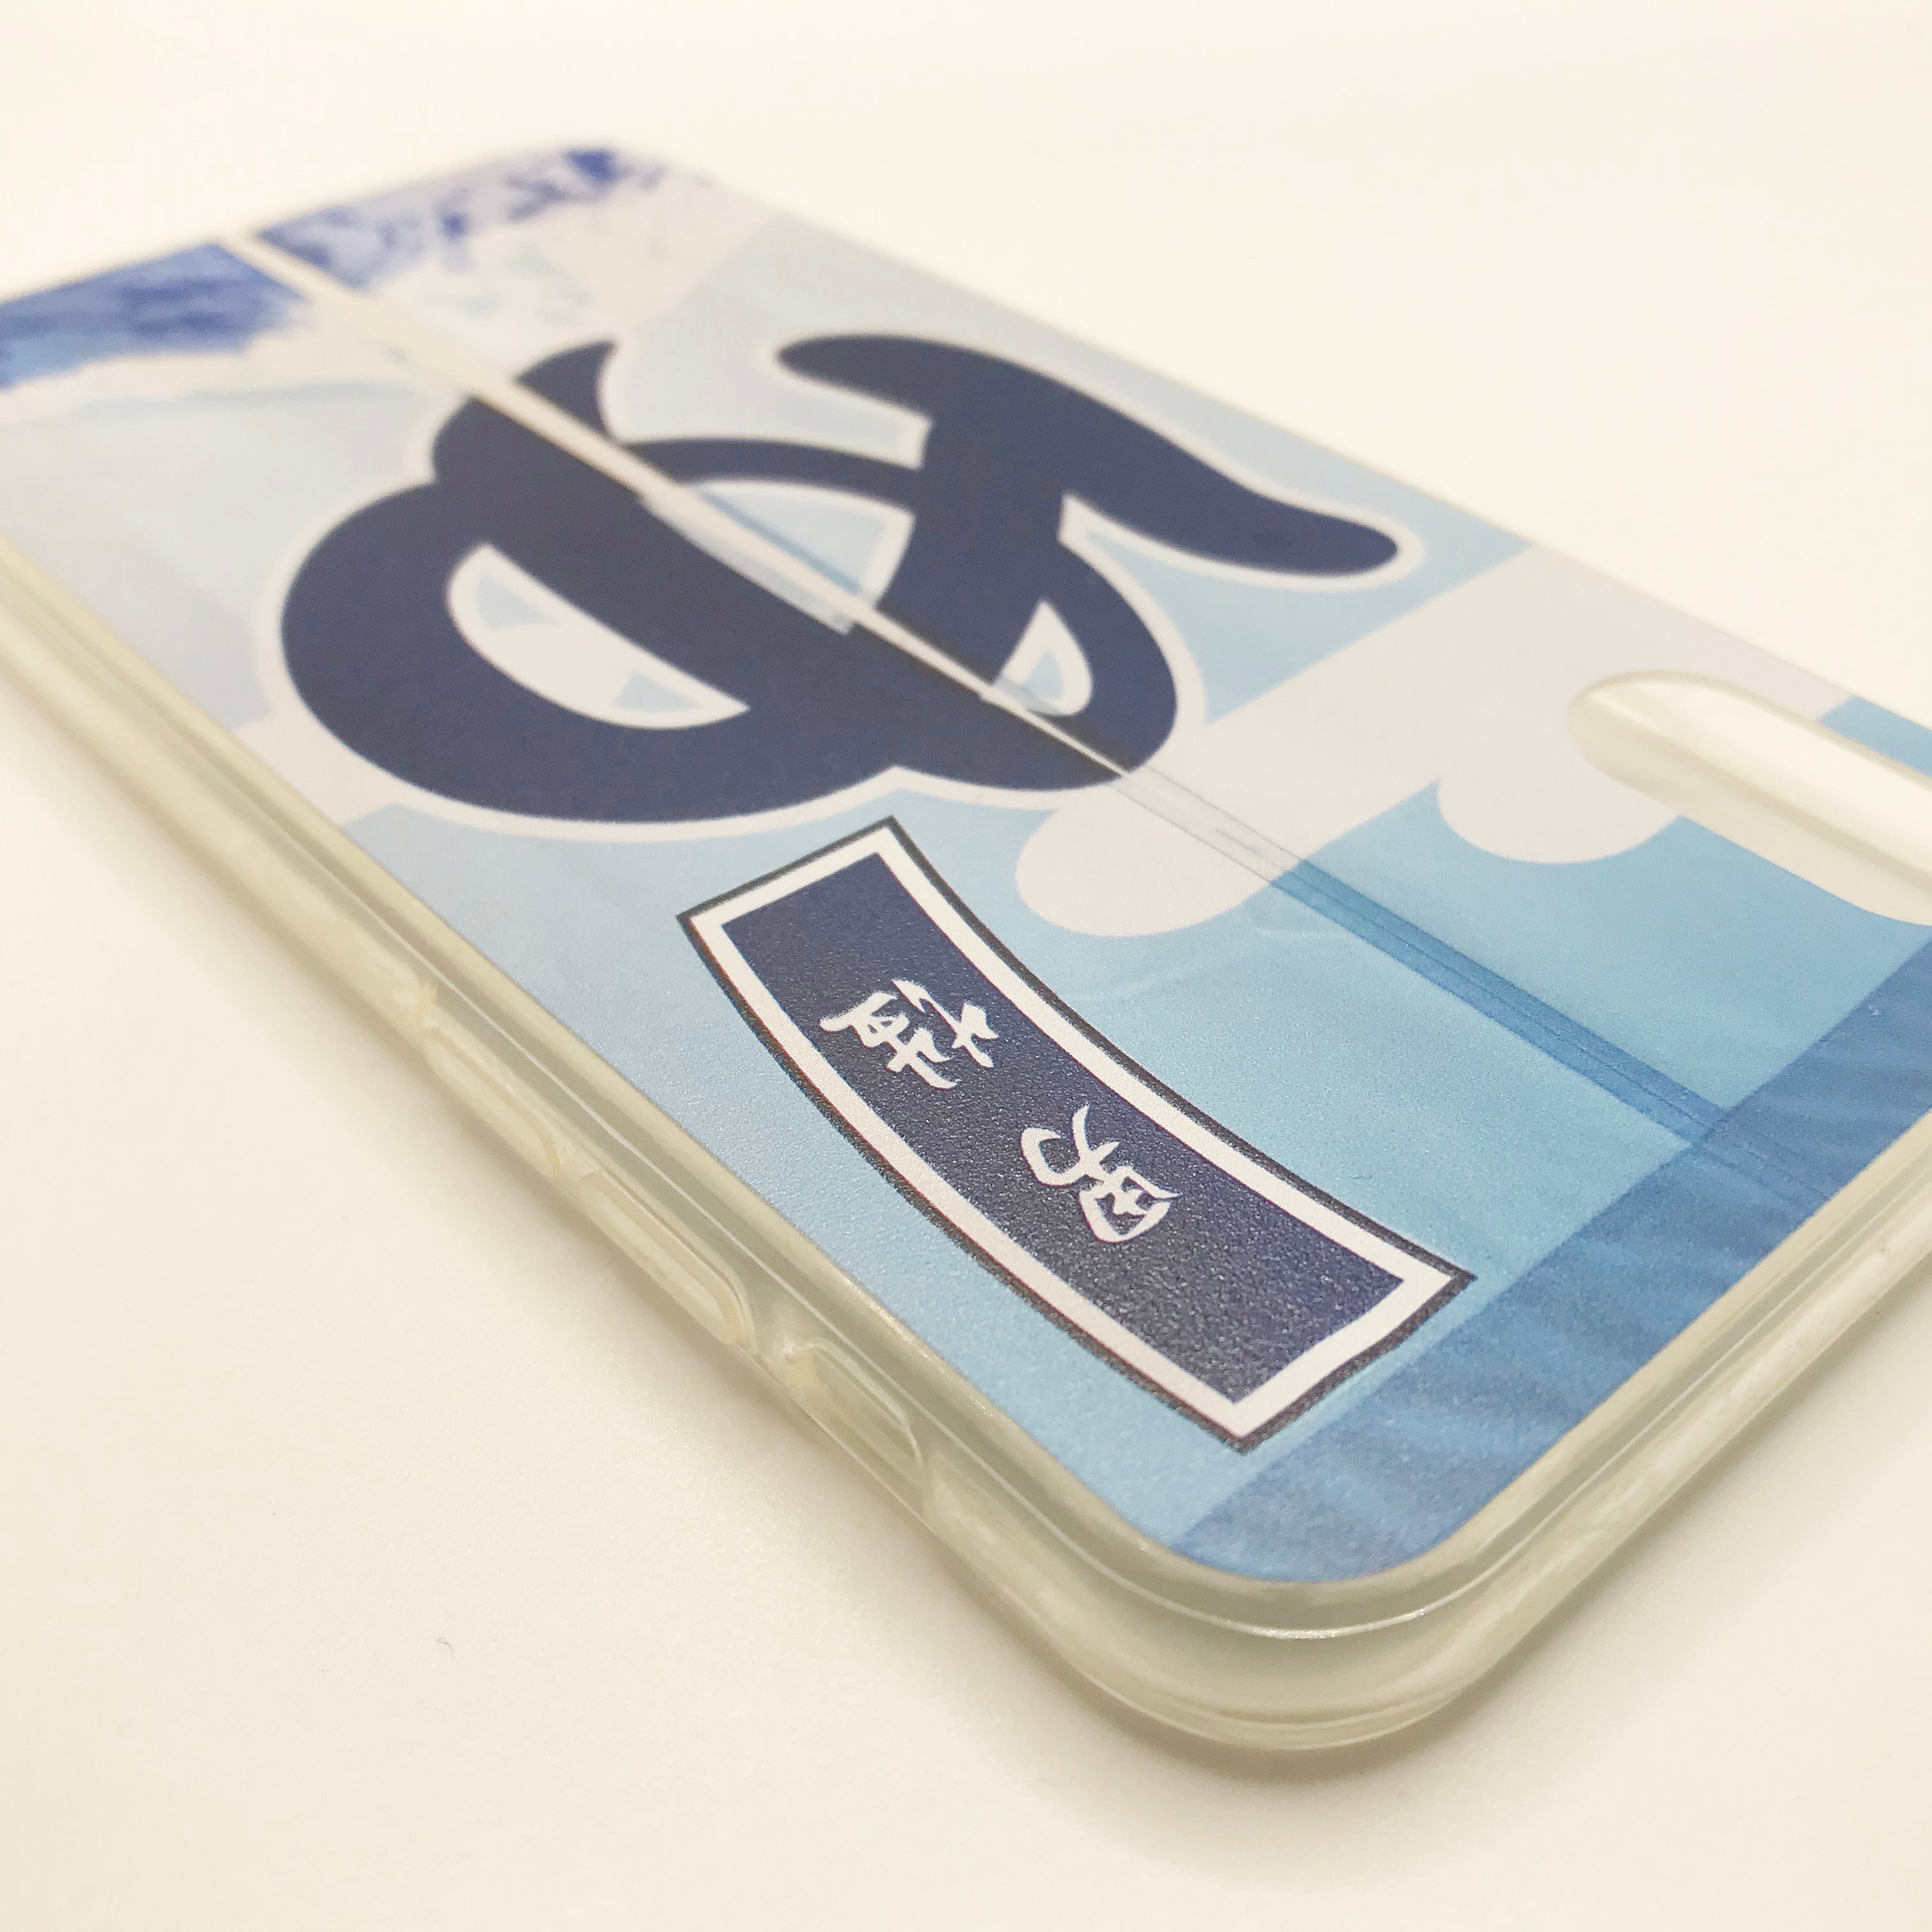 [80% OFF] Bunkyo Bath Association Mobile Case Blue (with mobile fan)